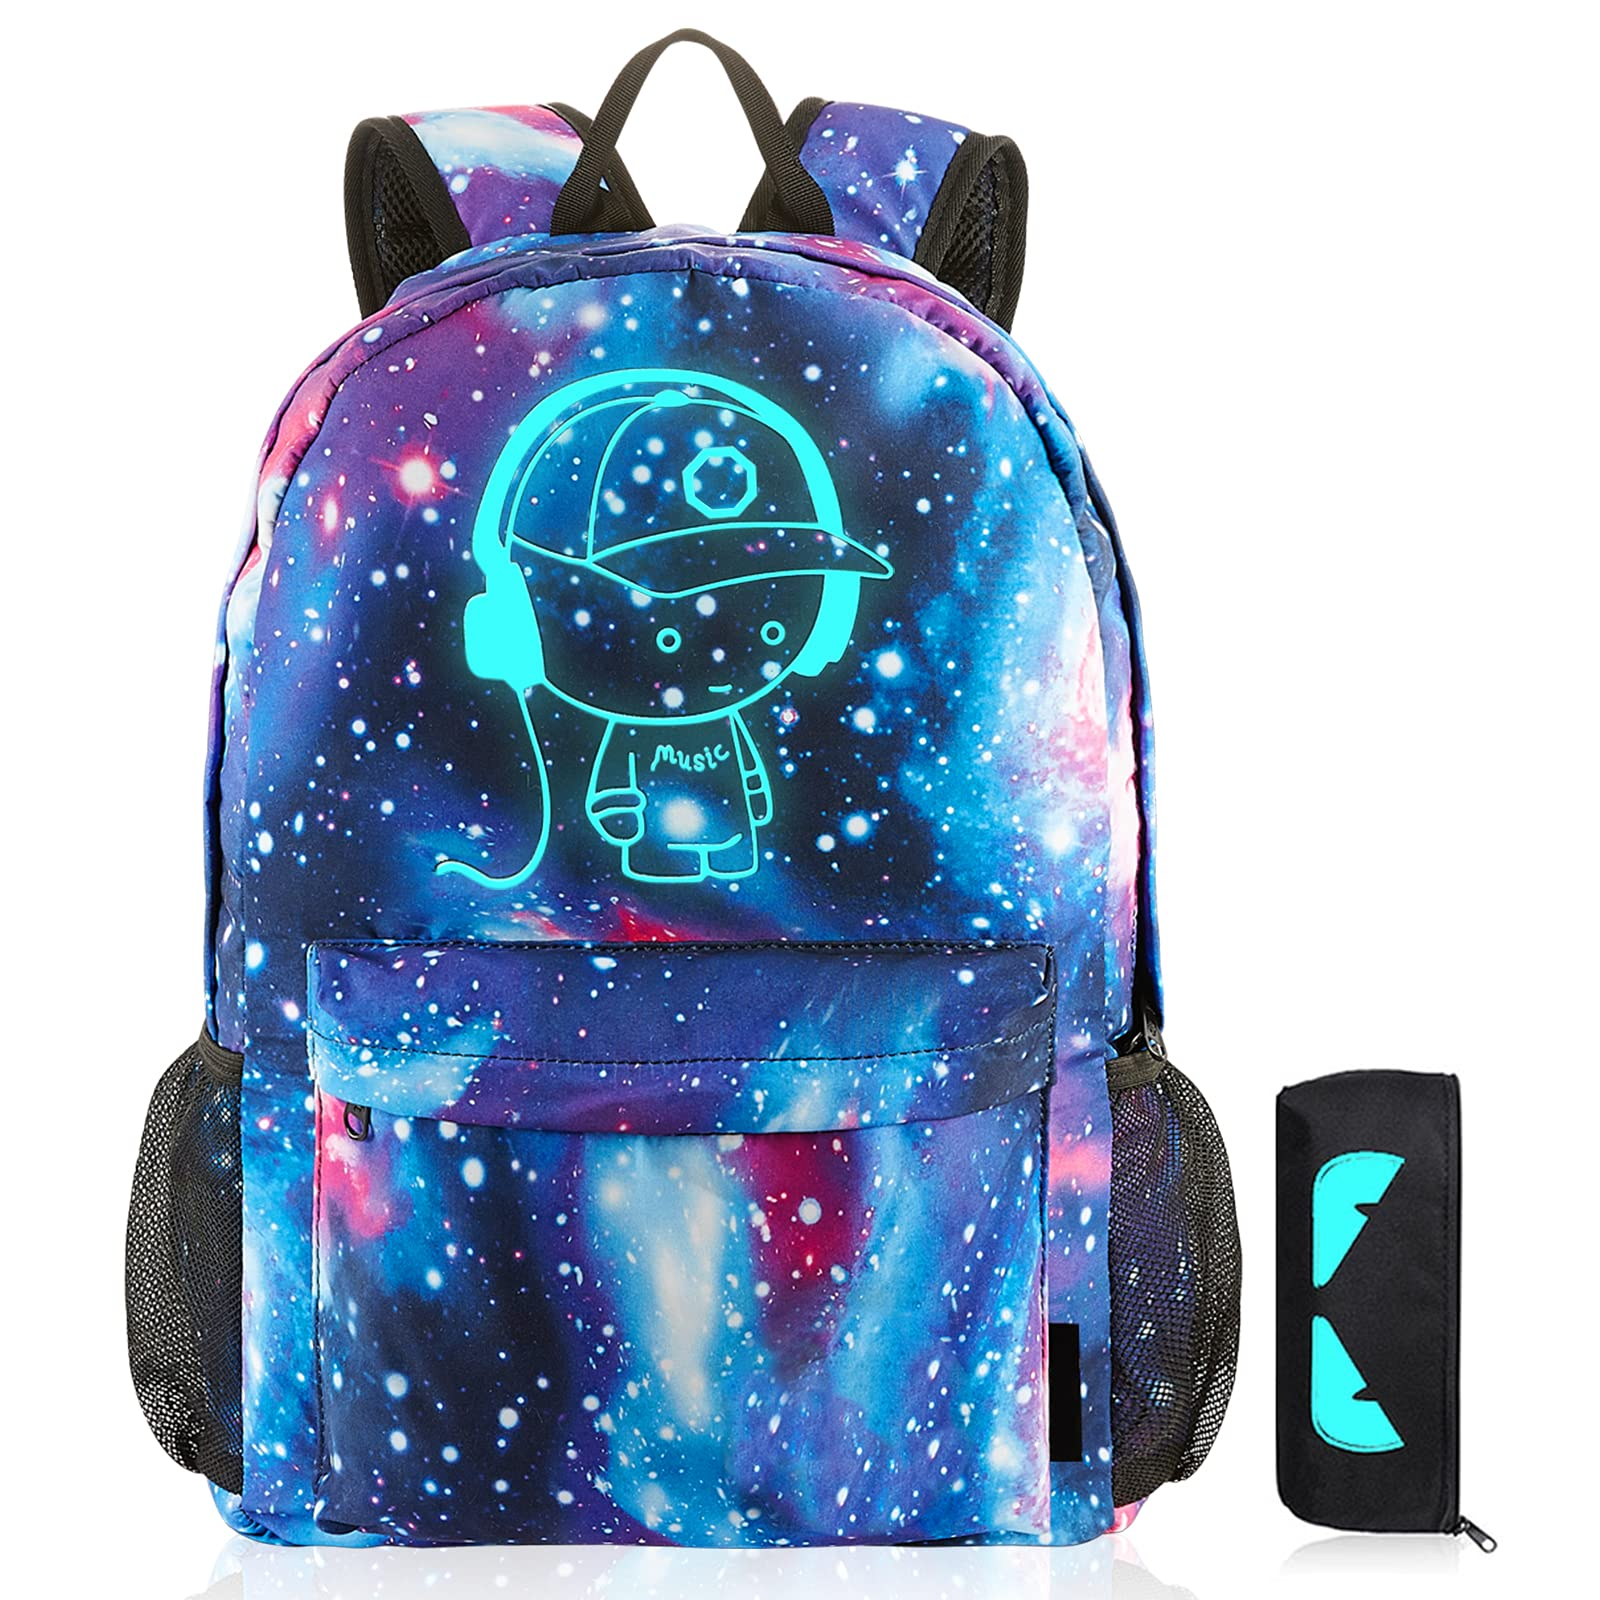 Galaxy School Backpack Kids Laptop Bag Bookbag Daypack Travel Teen Opening Ceremony Gift 